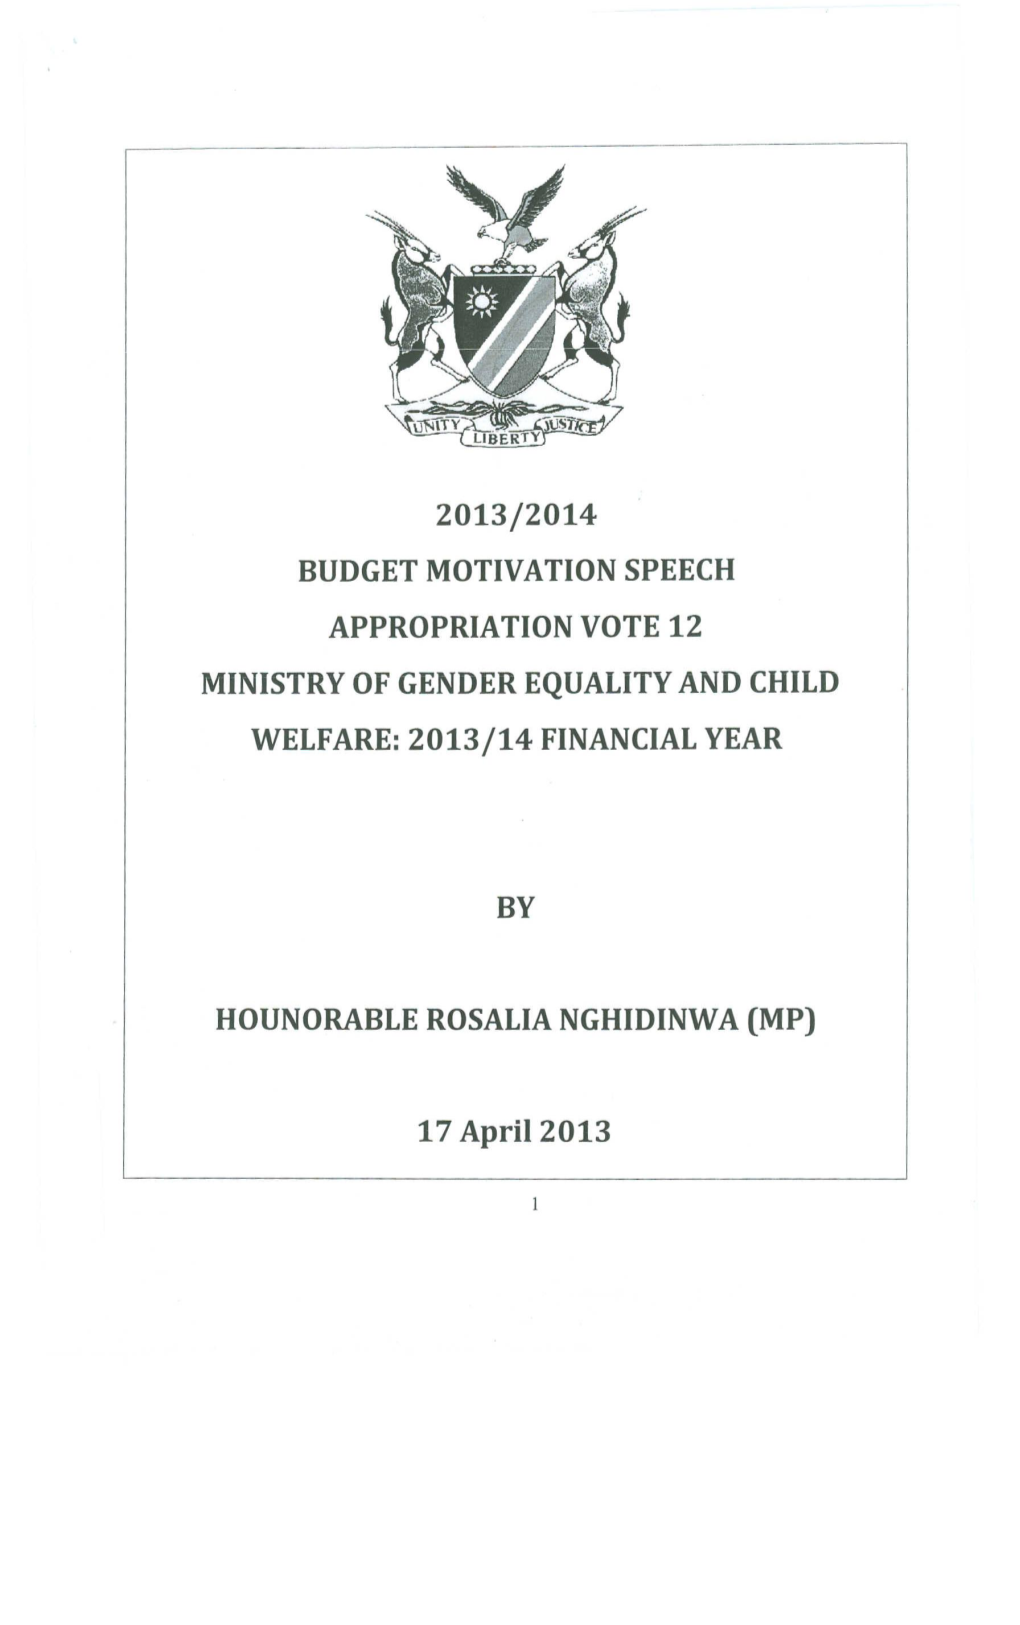 Budget Motivation Speech for VOTE 12 Ministry